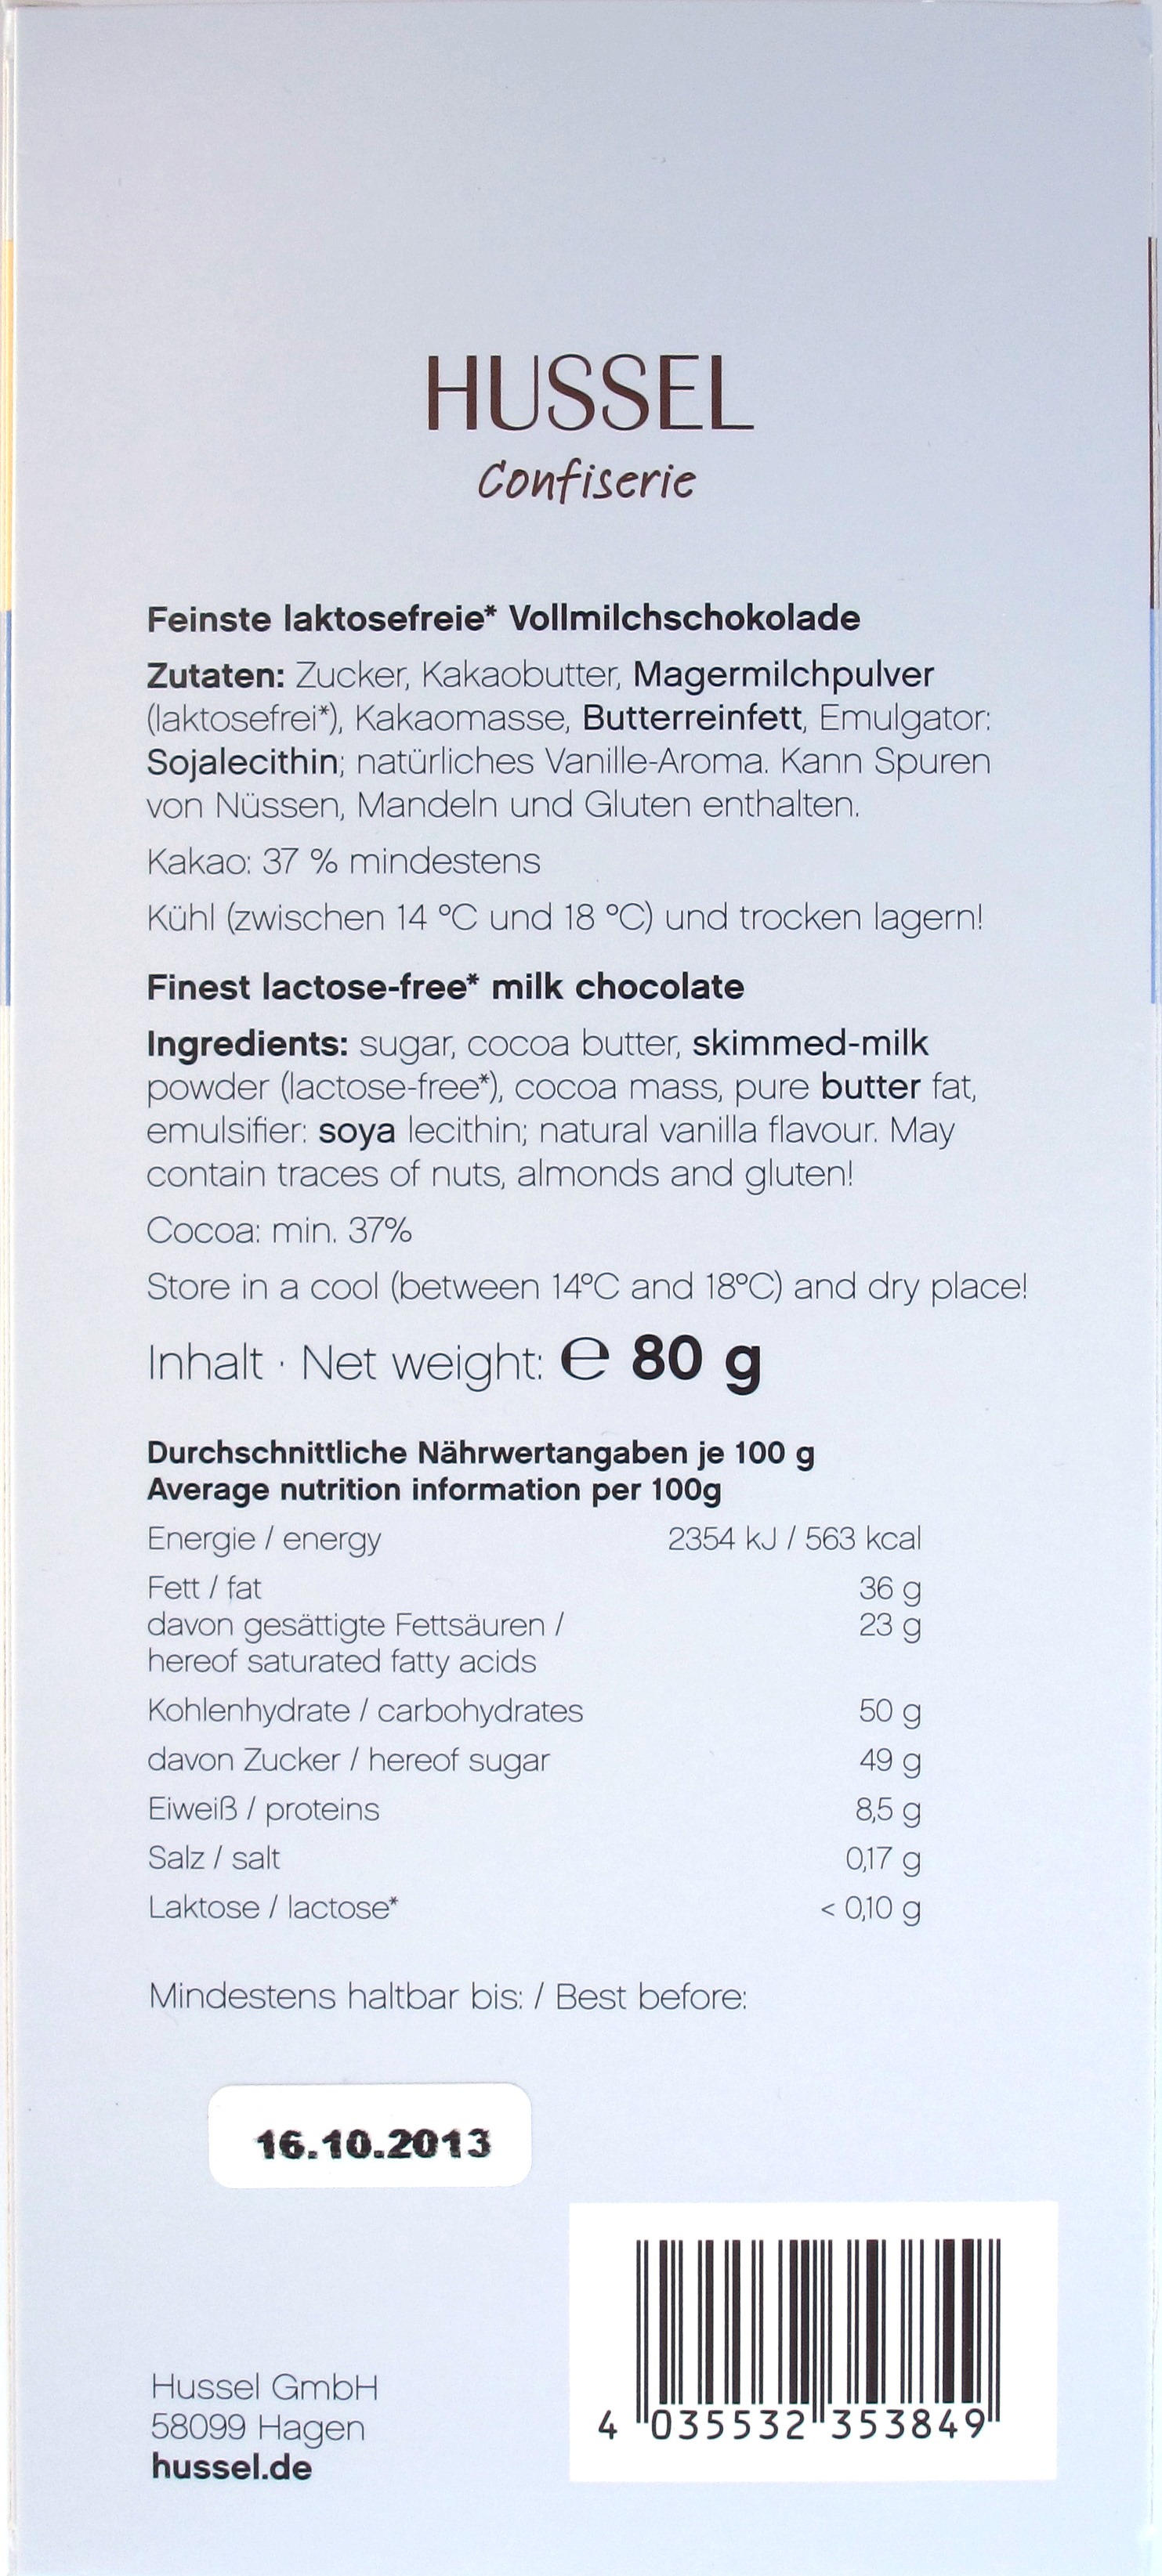 Hussel/Heilemann laktosefreie Vollmilchschokolade - Rückseite